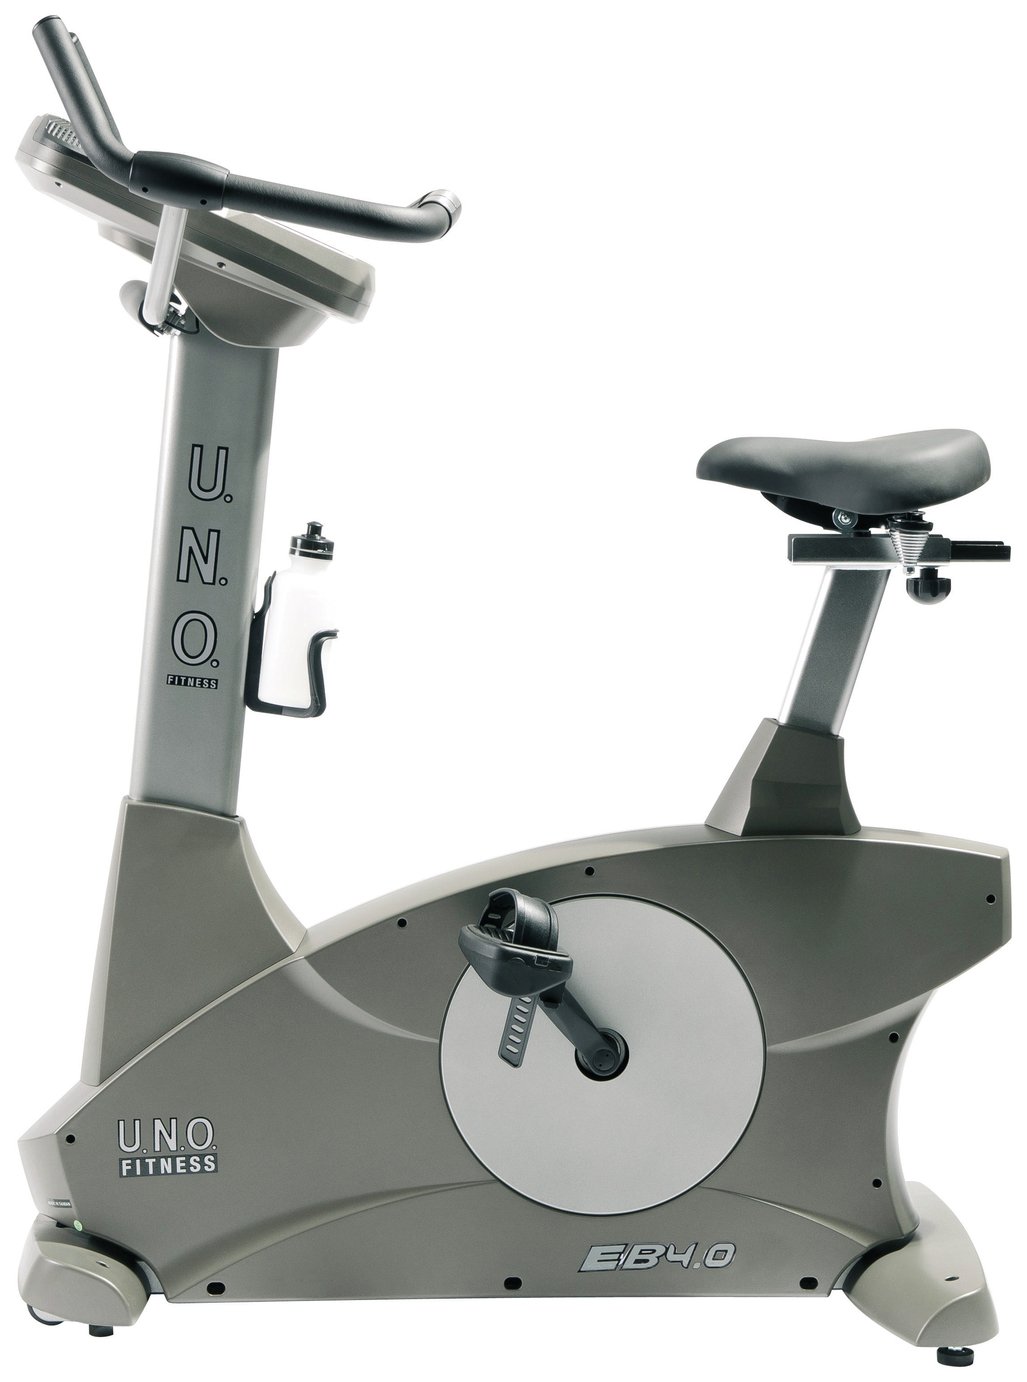 UNO Fitness Programmable Upright Ergometer Exercise Bike